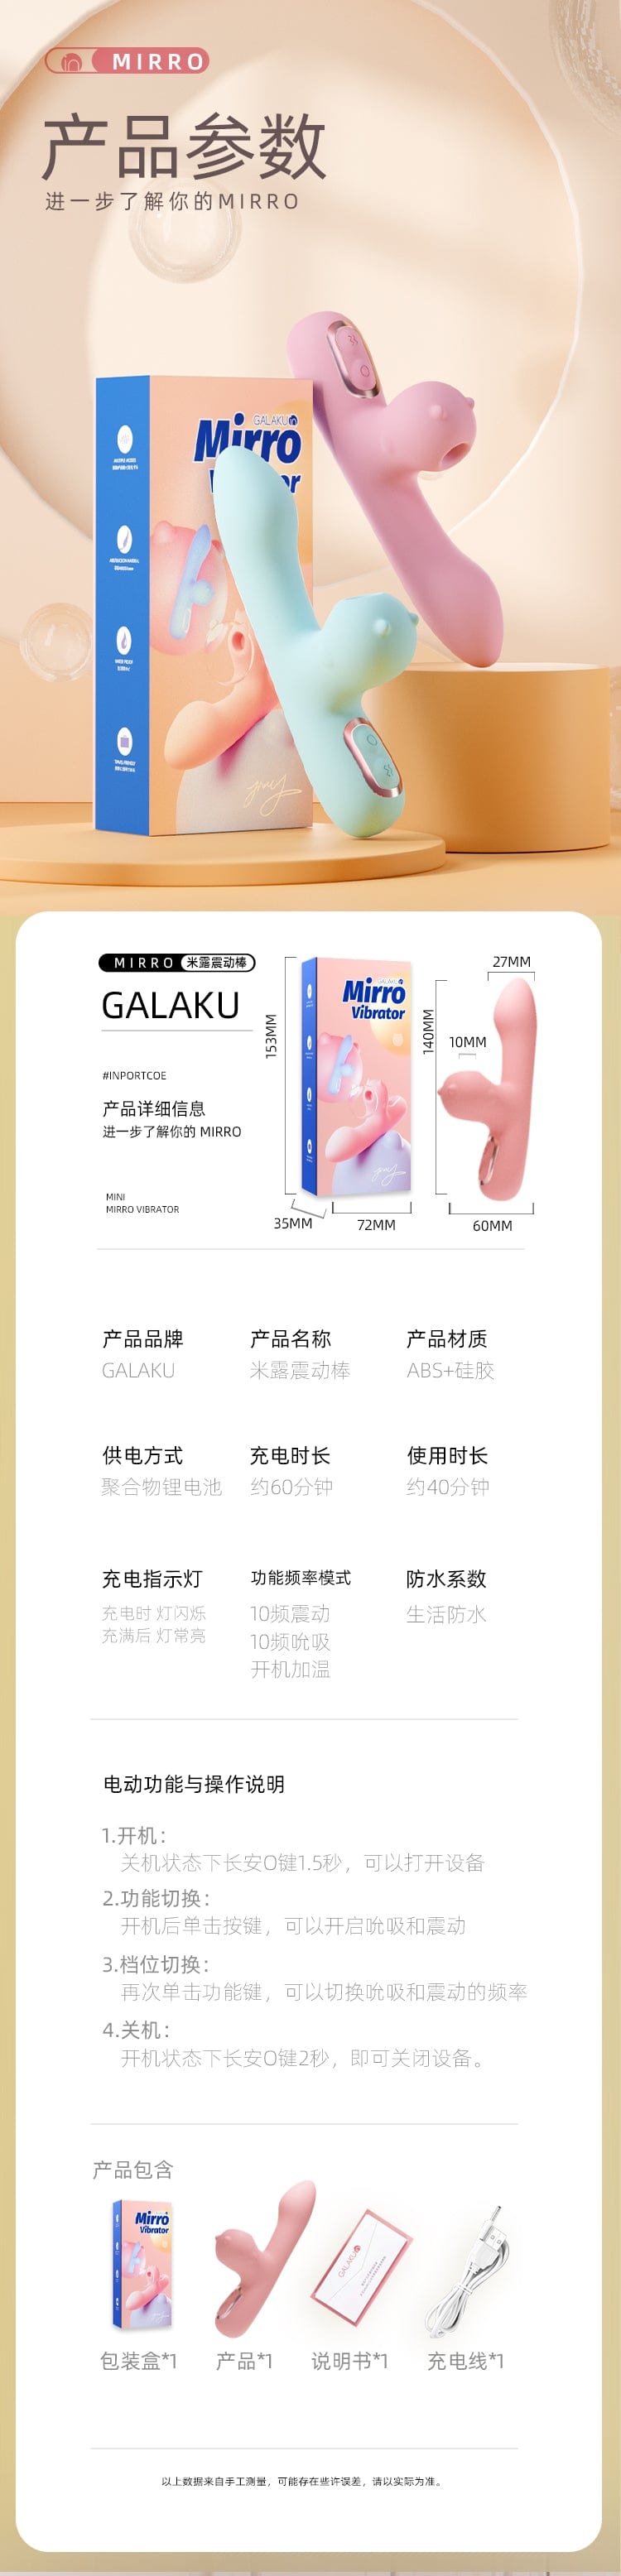 Galaku Mirro Mini Vibrator Powerful Vibration and Suction with Warming Function